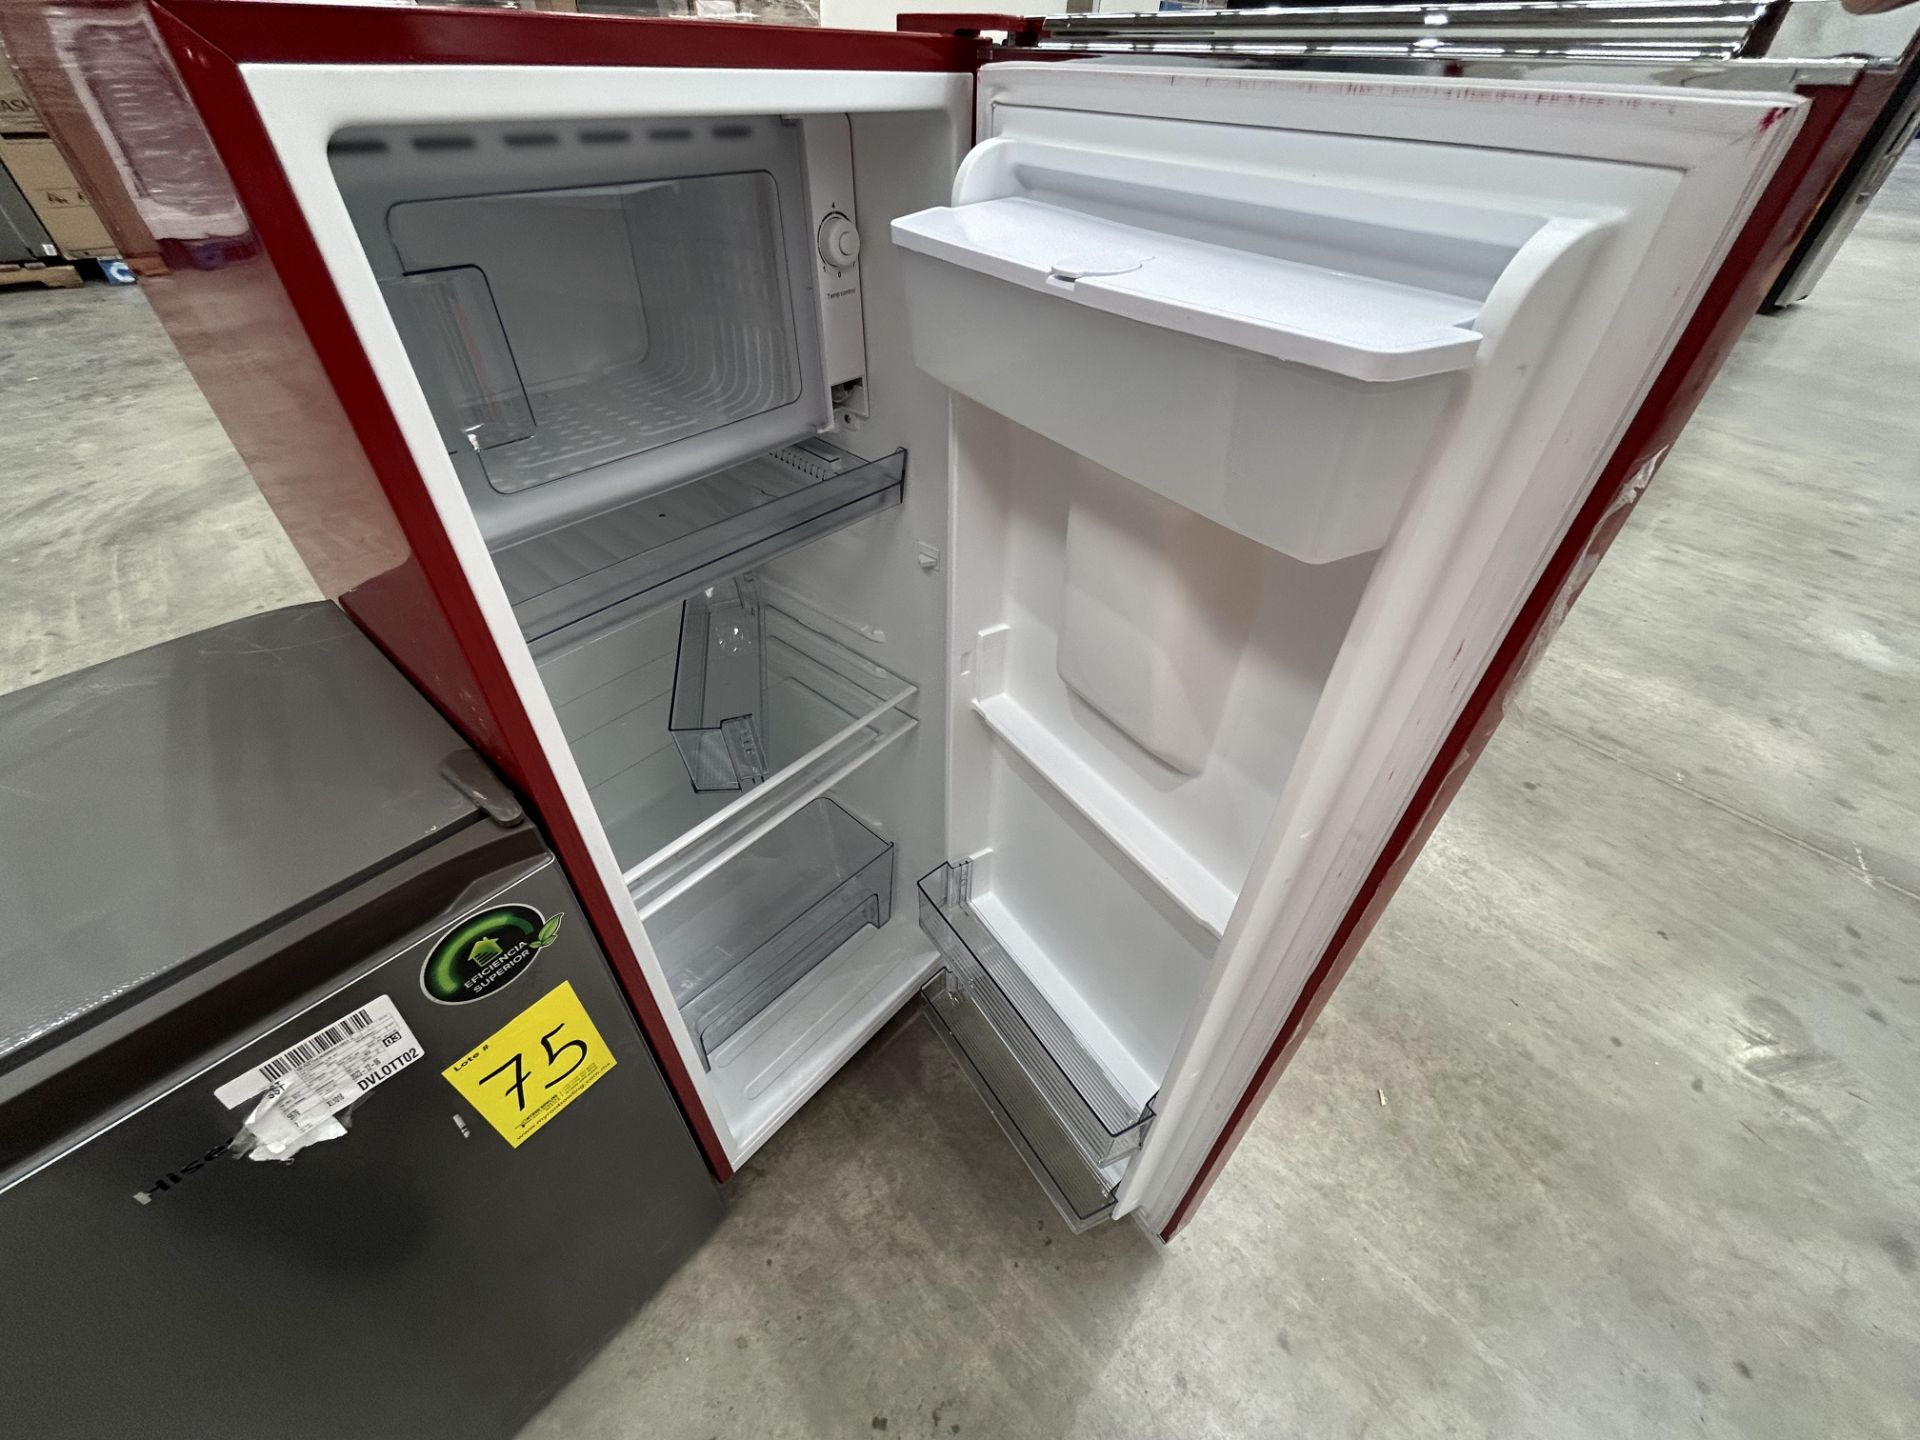 2 refrigeradores contiene: 1 refrigerador Marca GALANZ, Modelo GLR70MRD, Color ROJO; 1 Frigobar Mar - Bild 5 aus 6